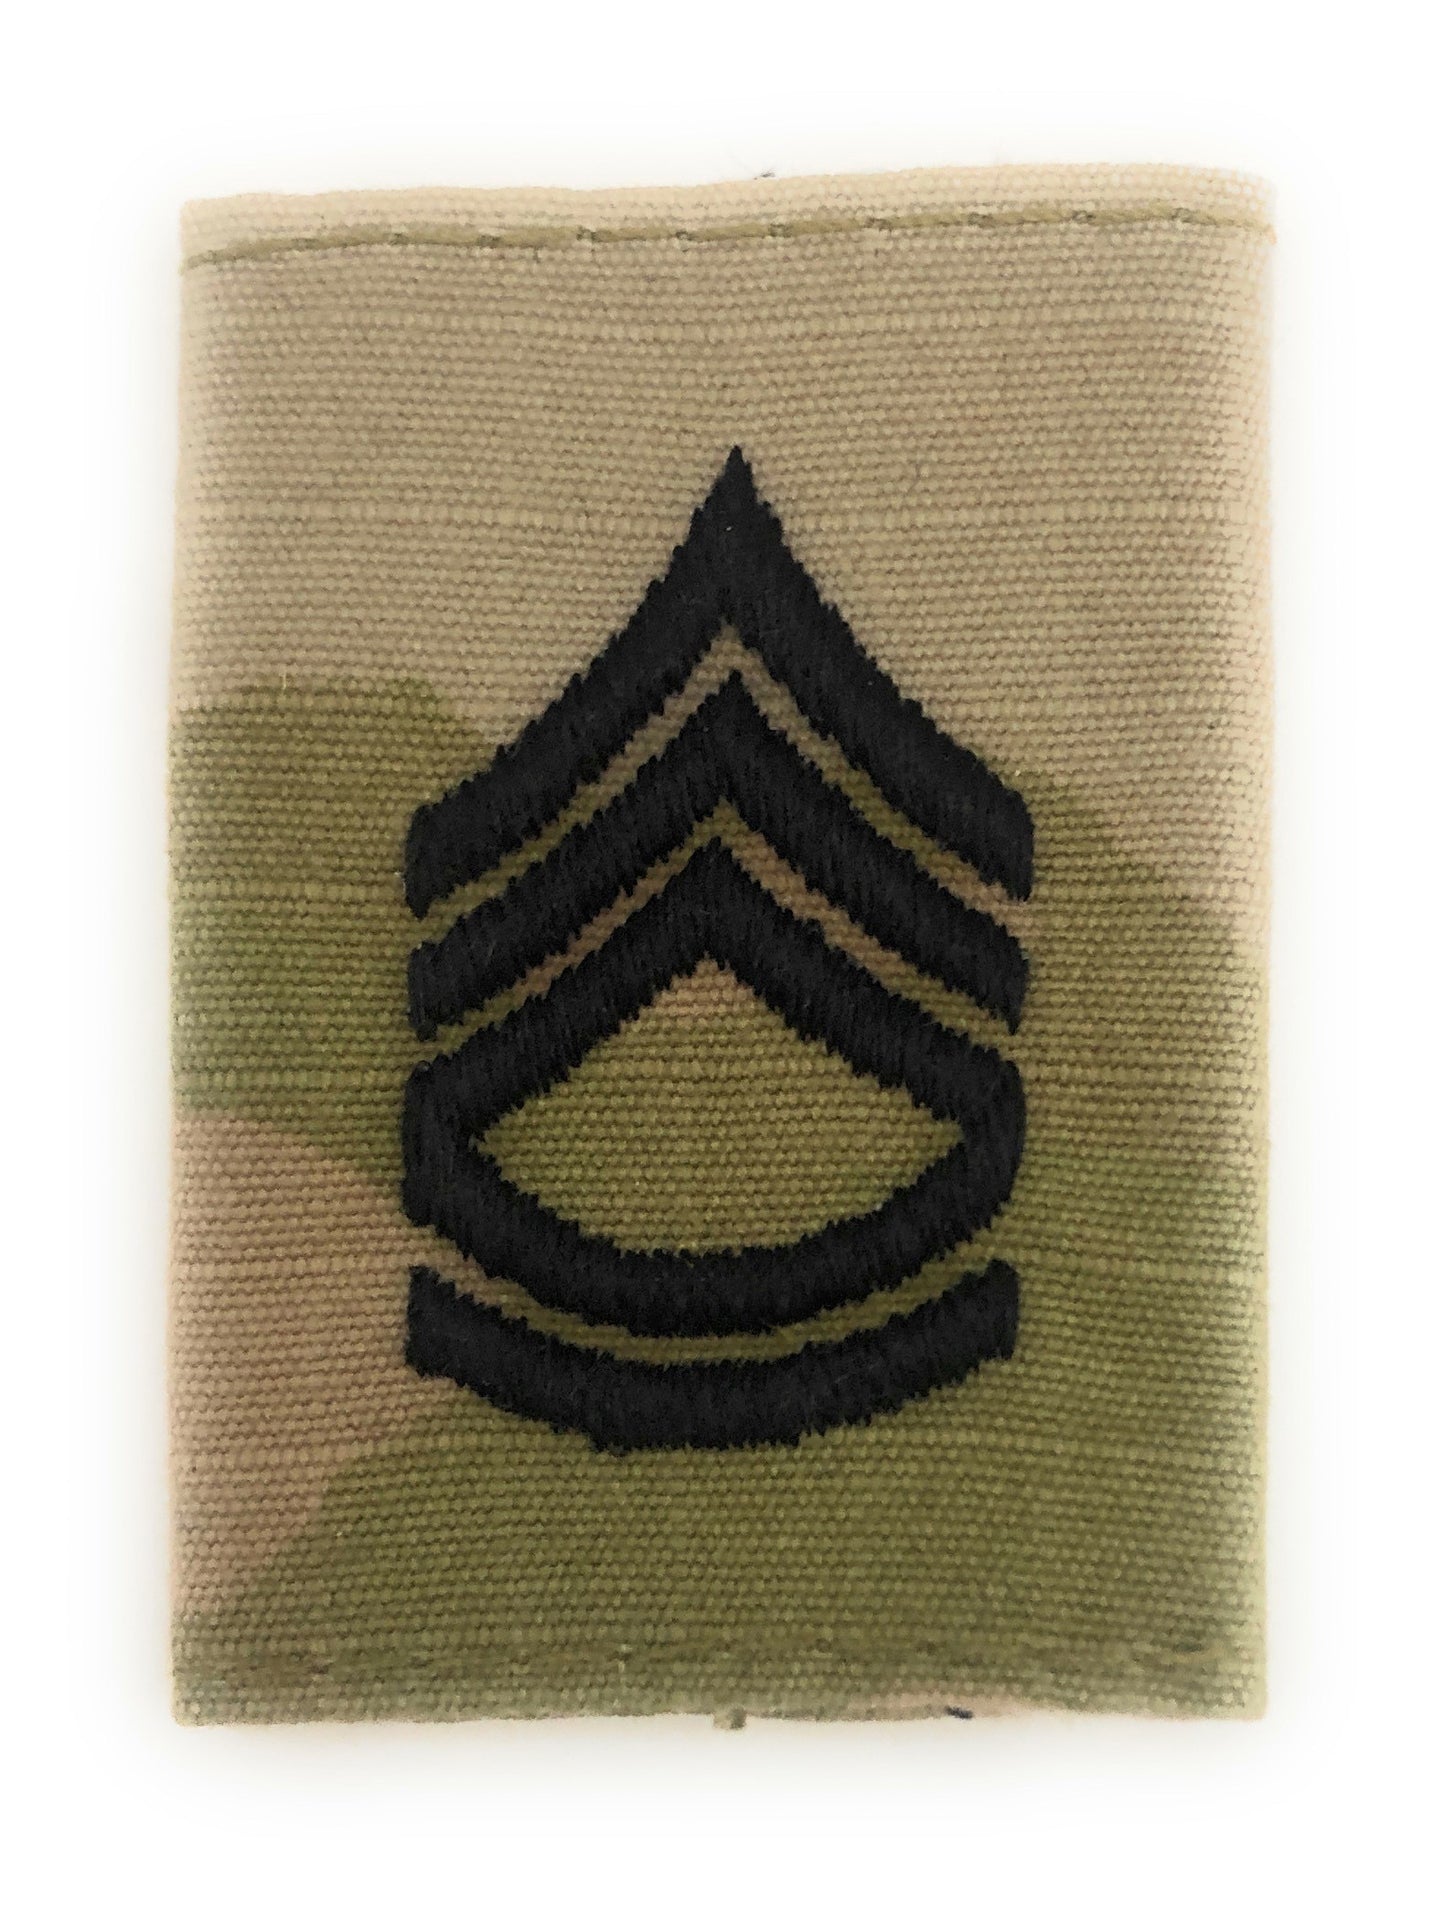 U.S. Army Sergeant first class OCP Gortex